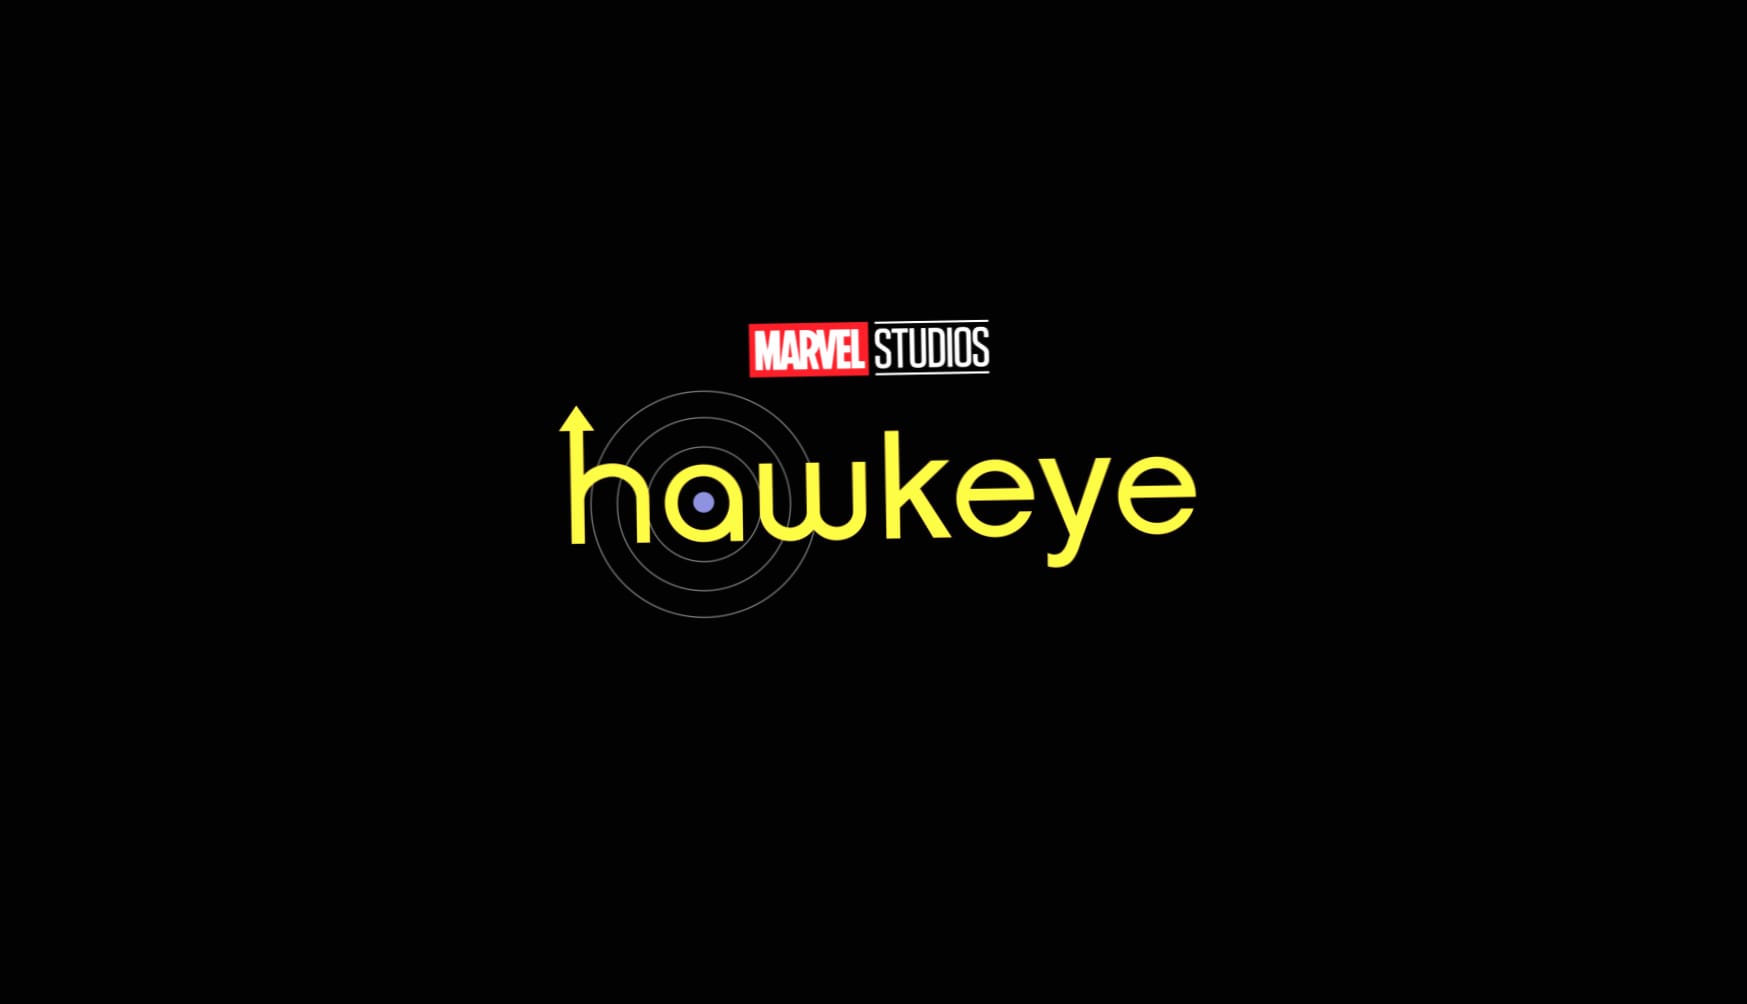 Hawkeye at 1024 x 1024 iPad size wallpapers HD quality